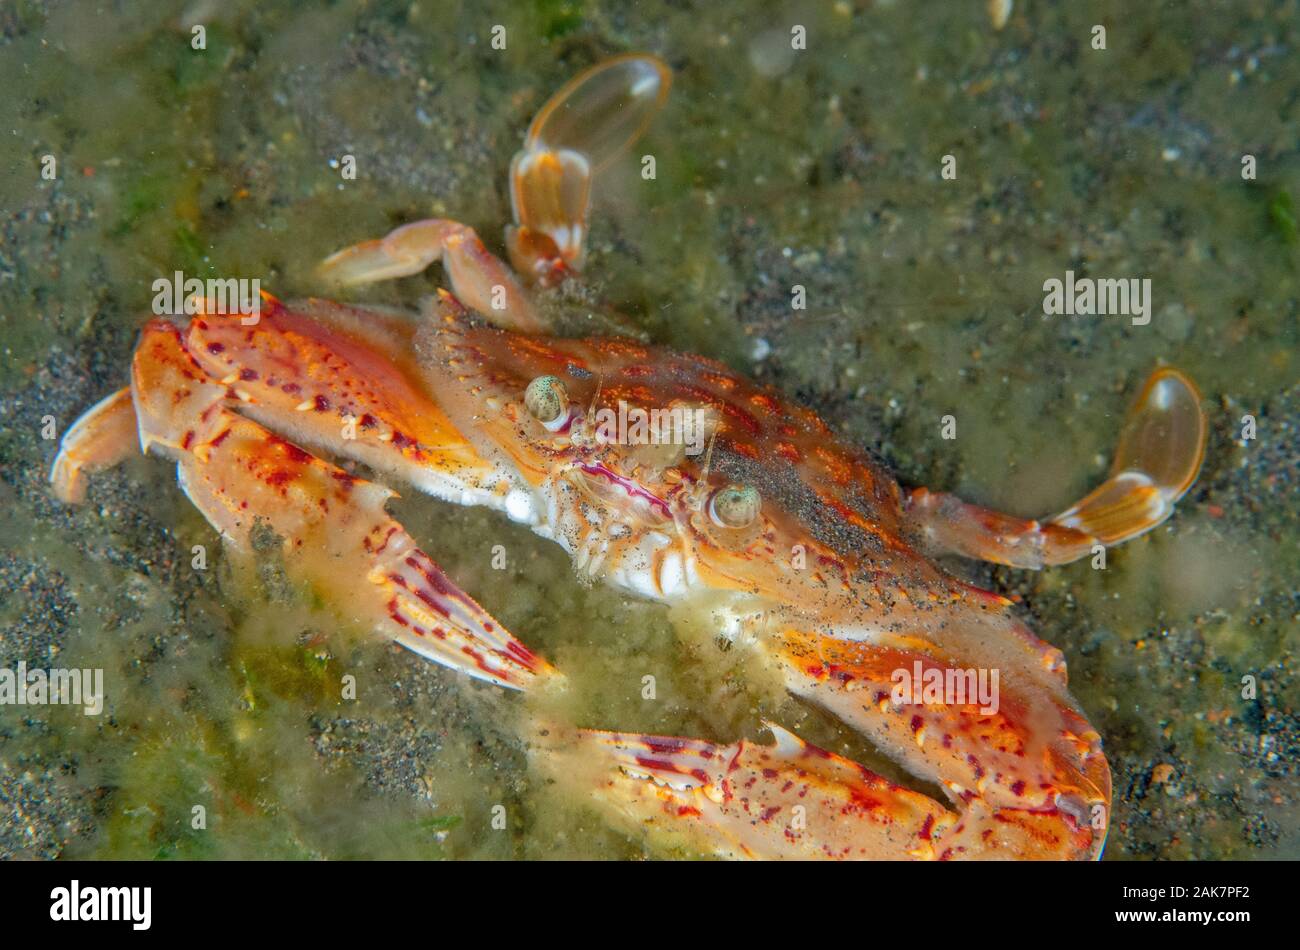 Swimming Crab, Portunus sp, Portunidae Family, on algae on sand, night dive, Melasti dive site, Amed, Bali, Indonesia, Indian Ocean Stock Photo